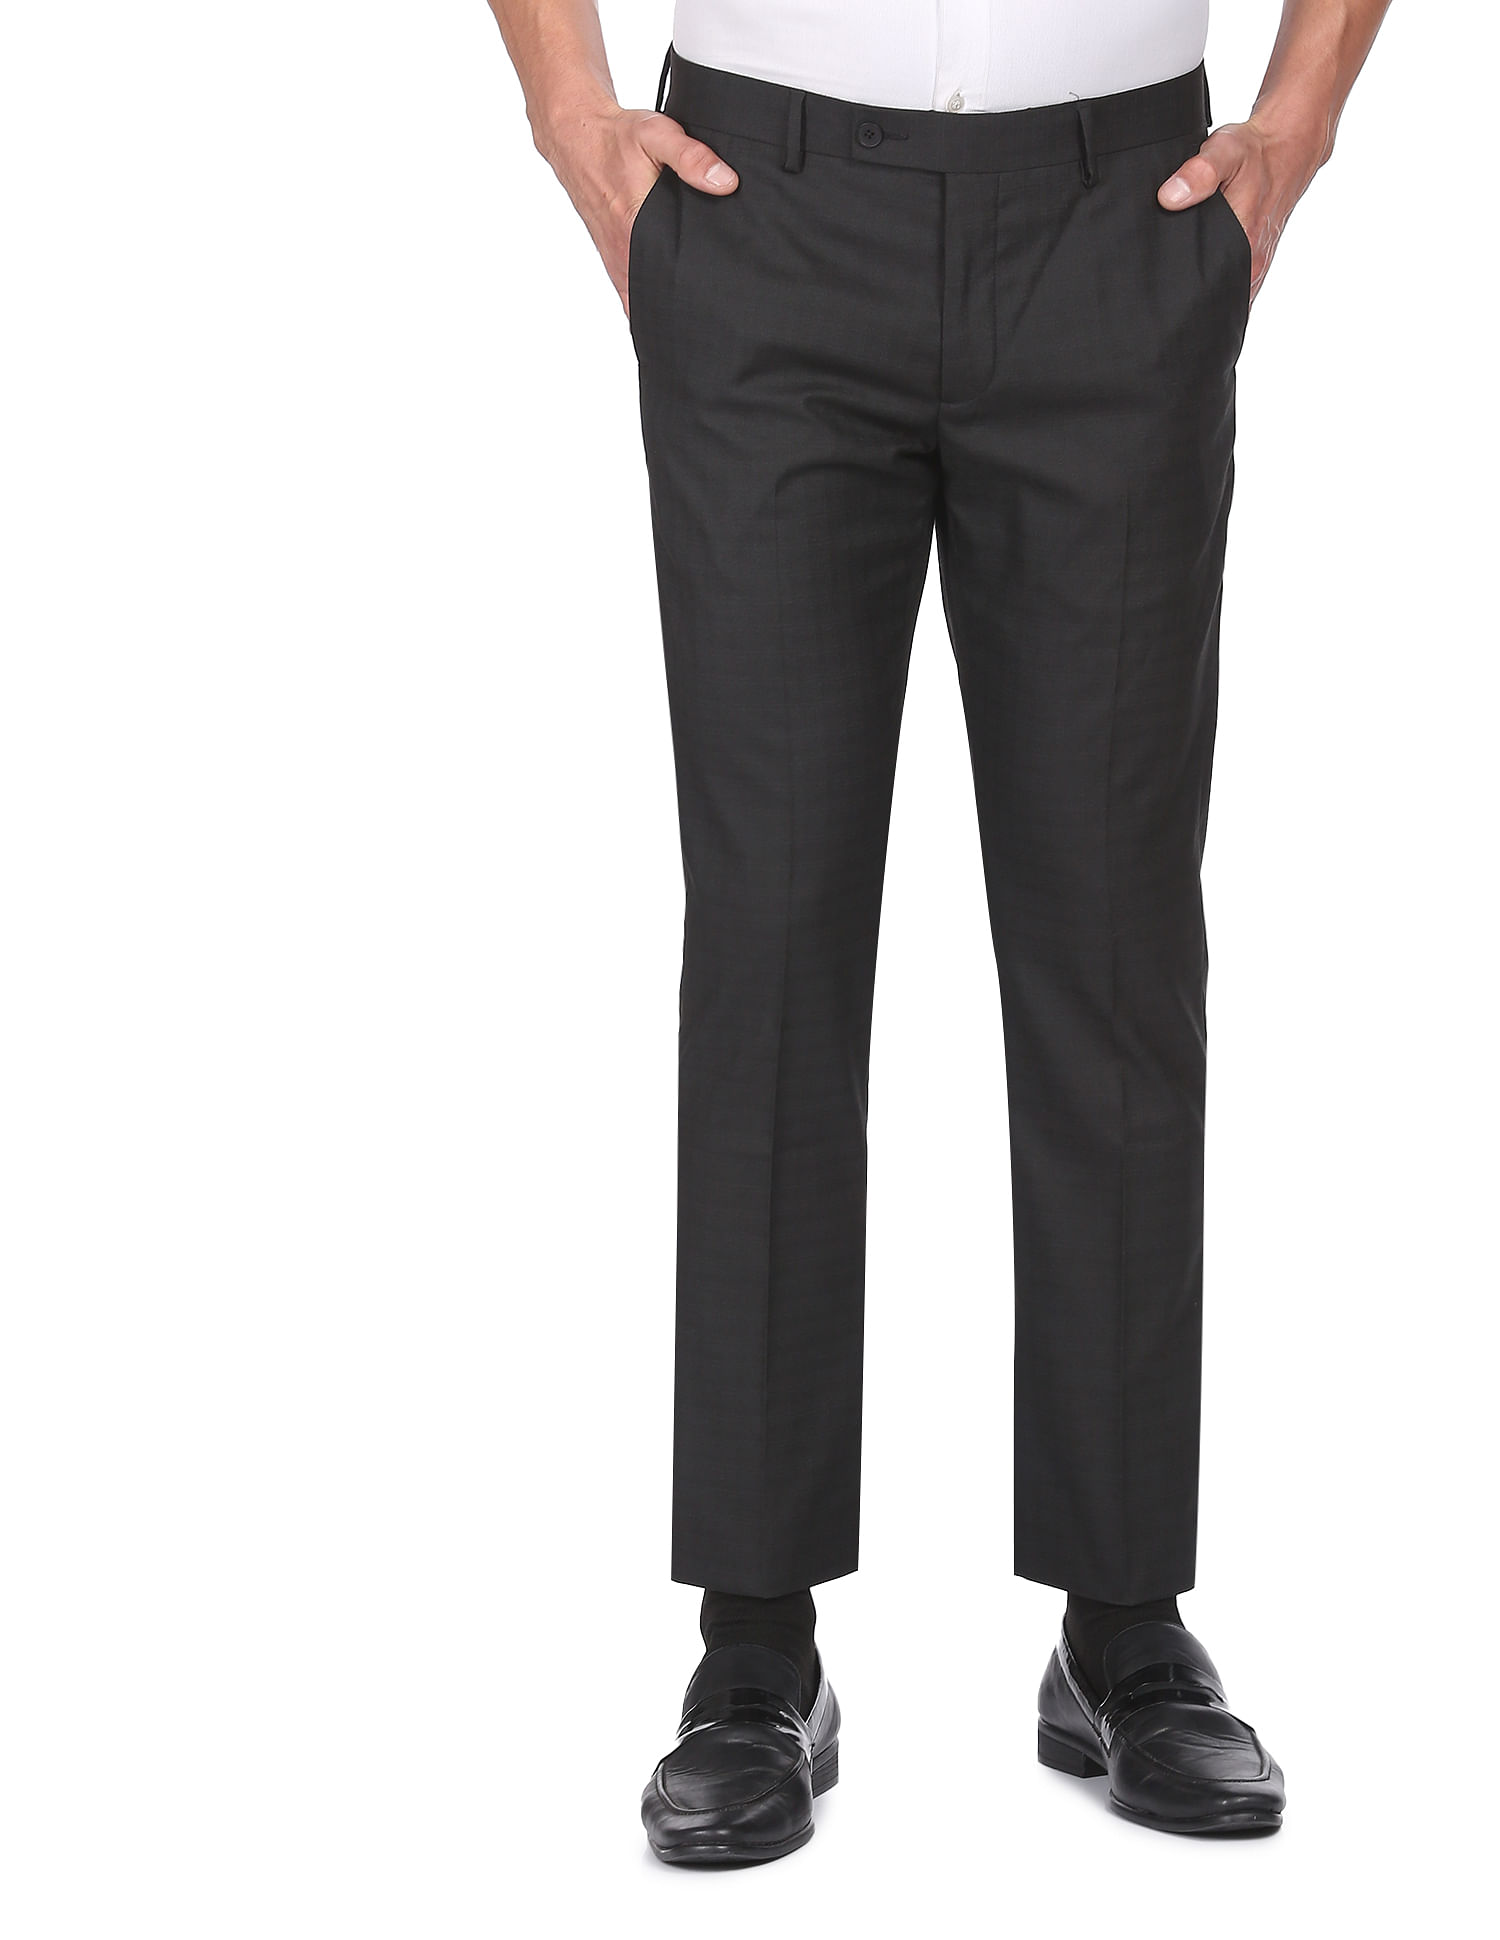 JeeNay Formal Pant for men/Formal Slim Fit Trousers/ Formal Office Pants  -Lt Grey